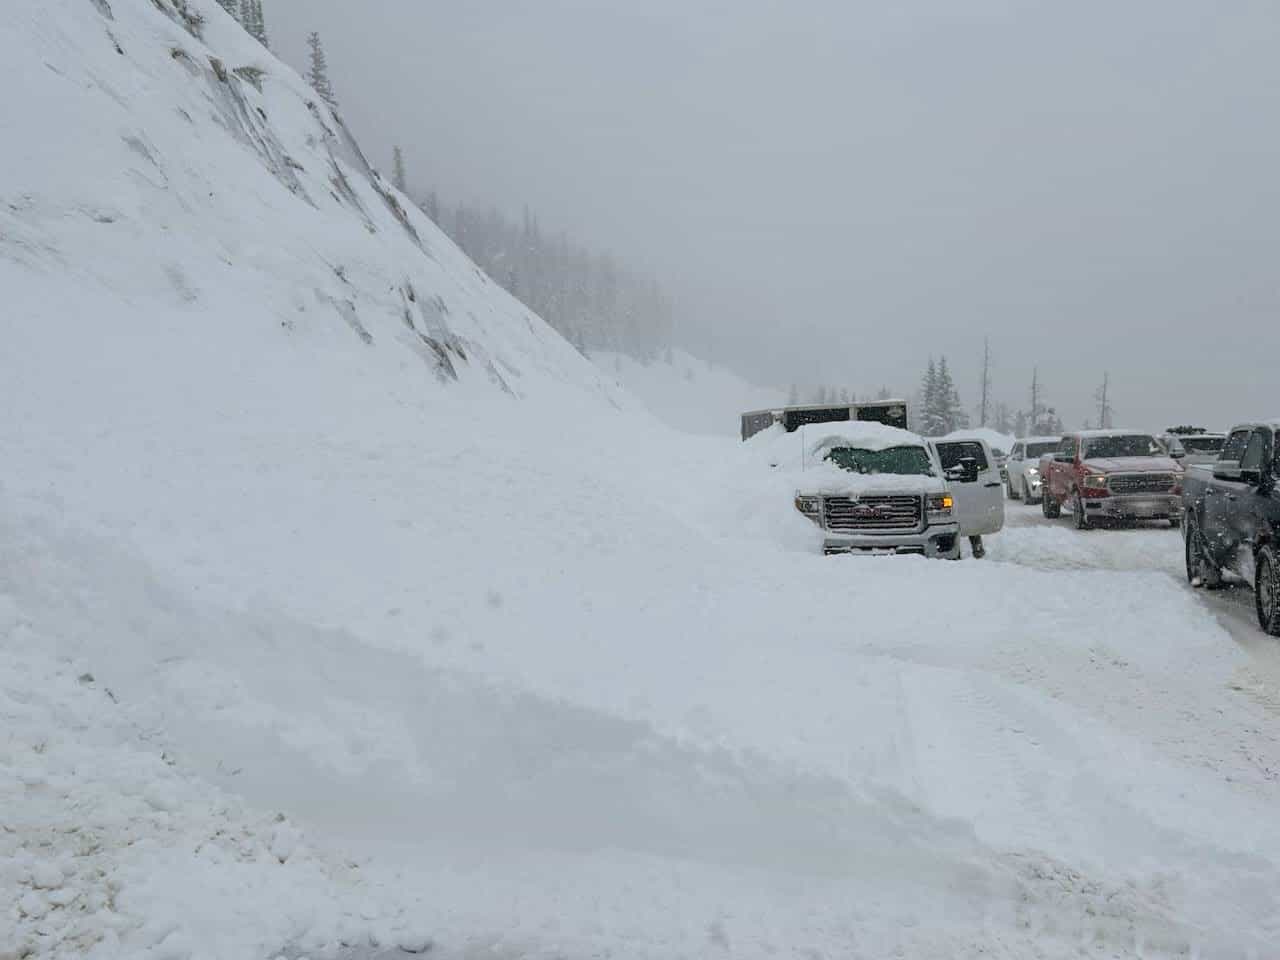 Berthoud Pass avalanche buried 10 cars